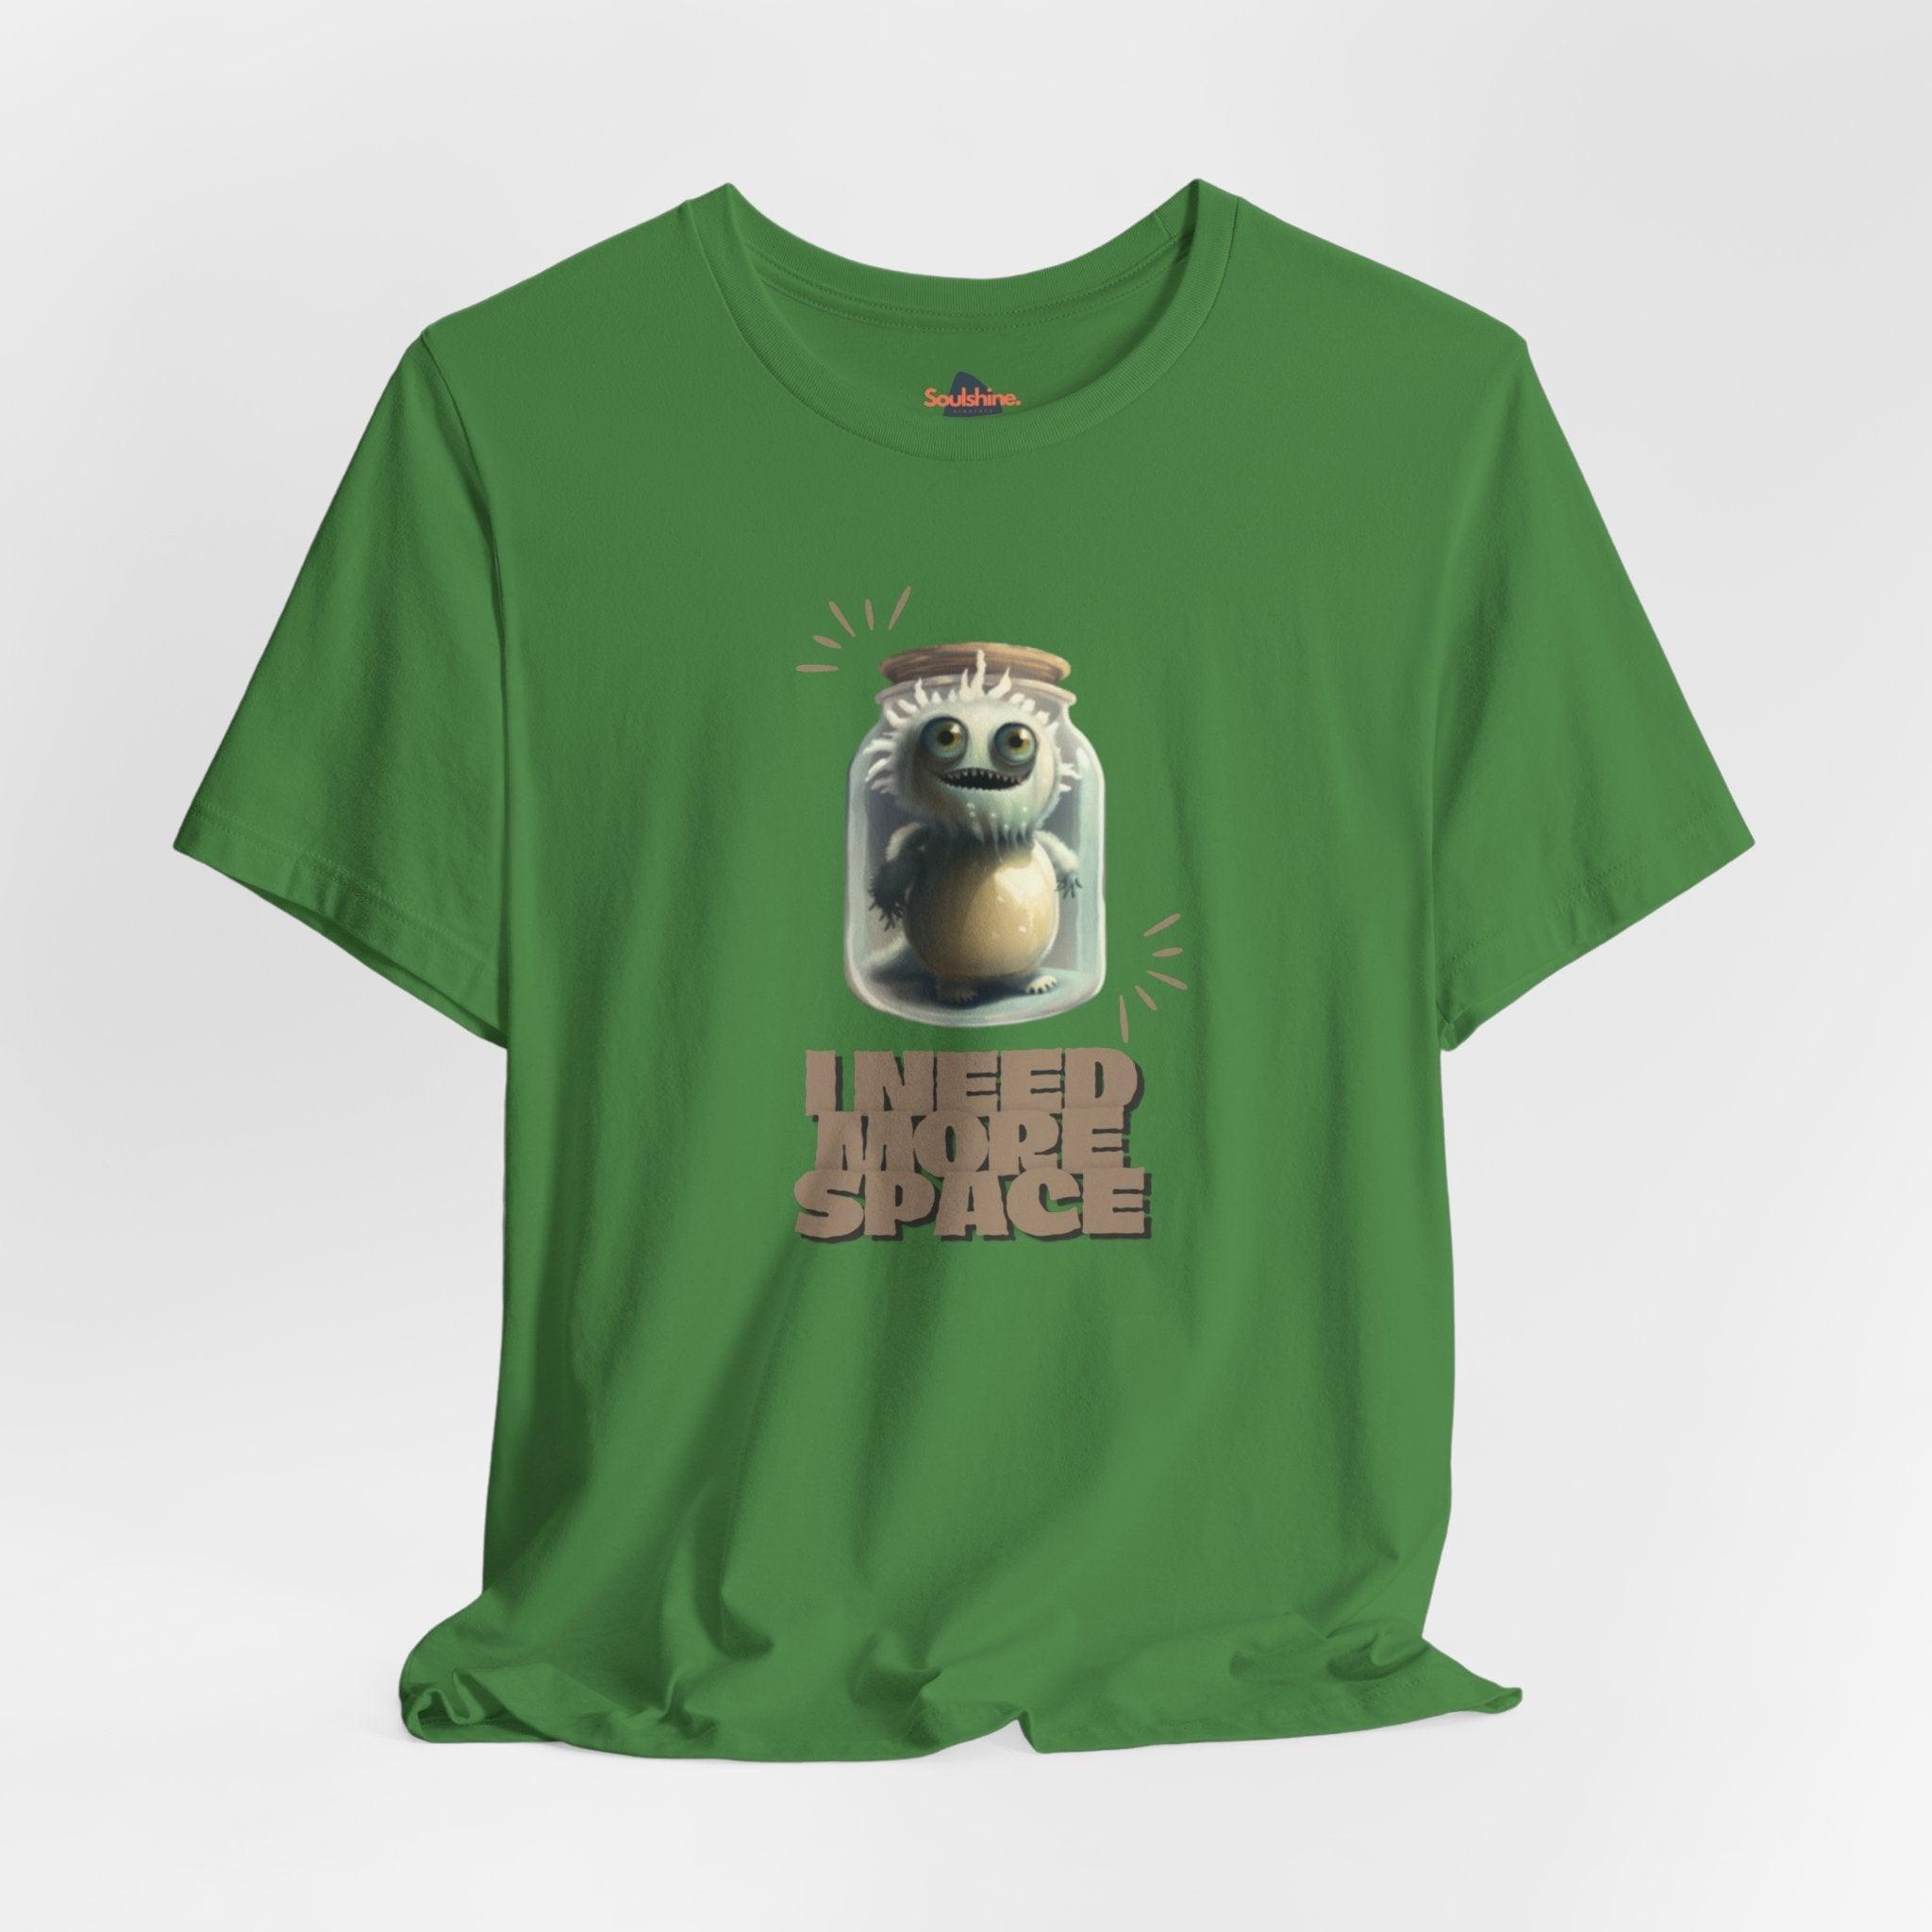 I need more space - Funny T-Shirt - Unisex Jersey Short Sleeve Tee - US Leaf S T-Shirt by Soulshinecreators | Soulshinecreators